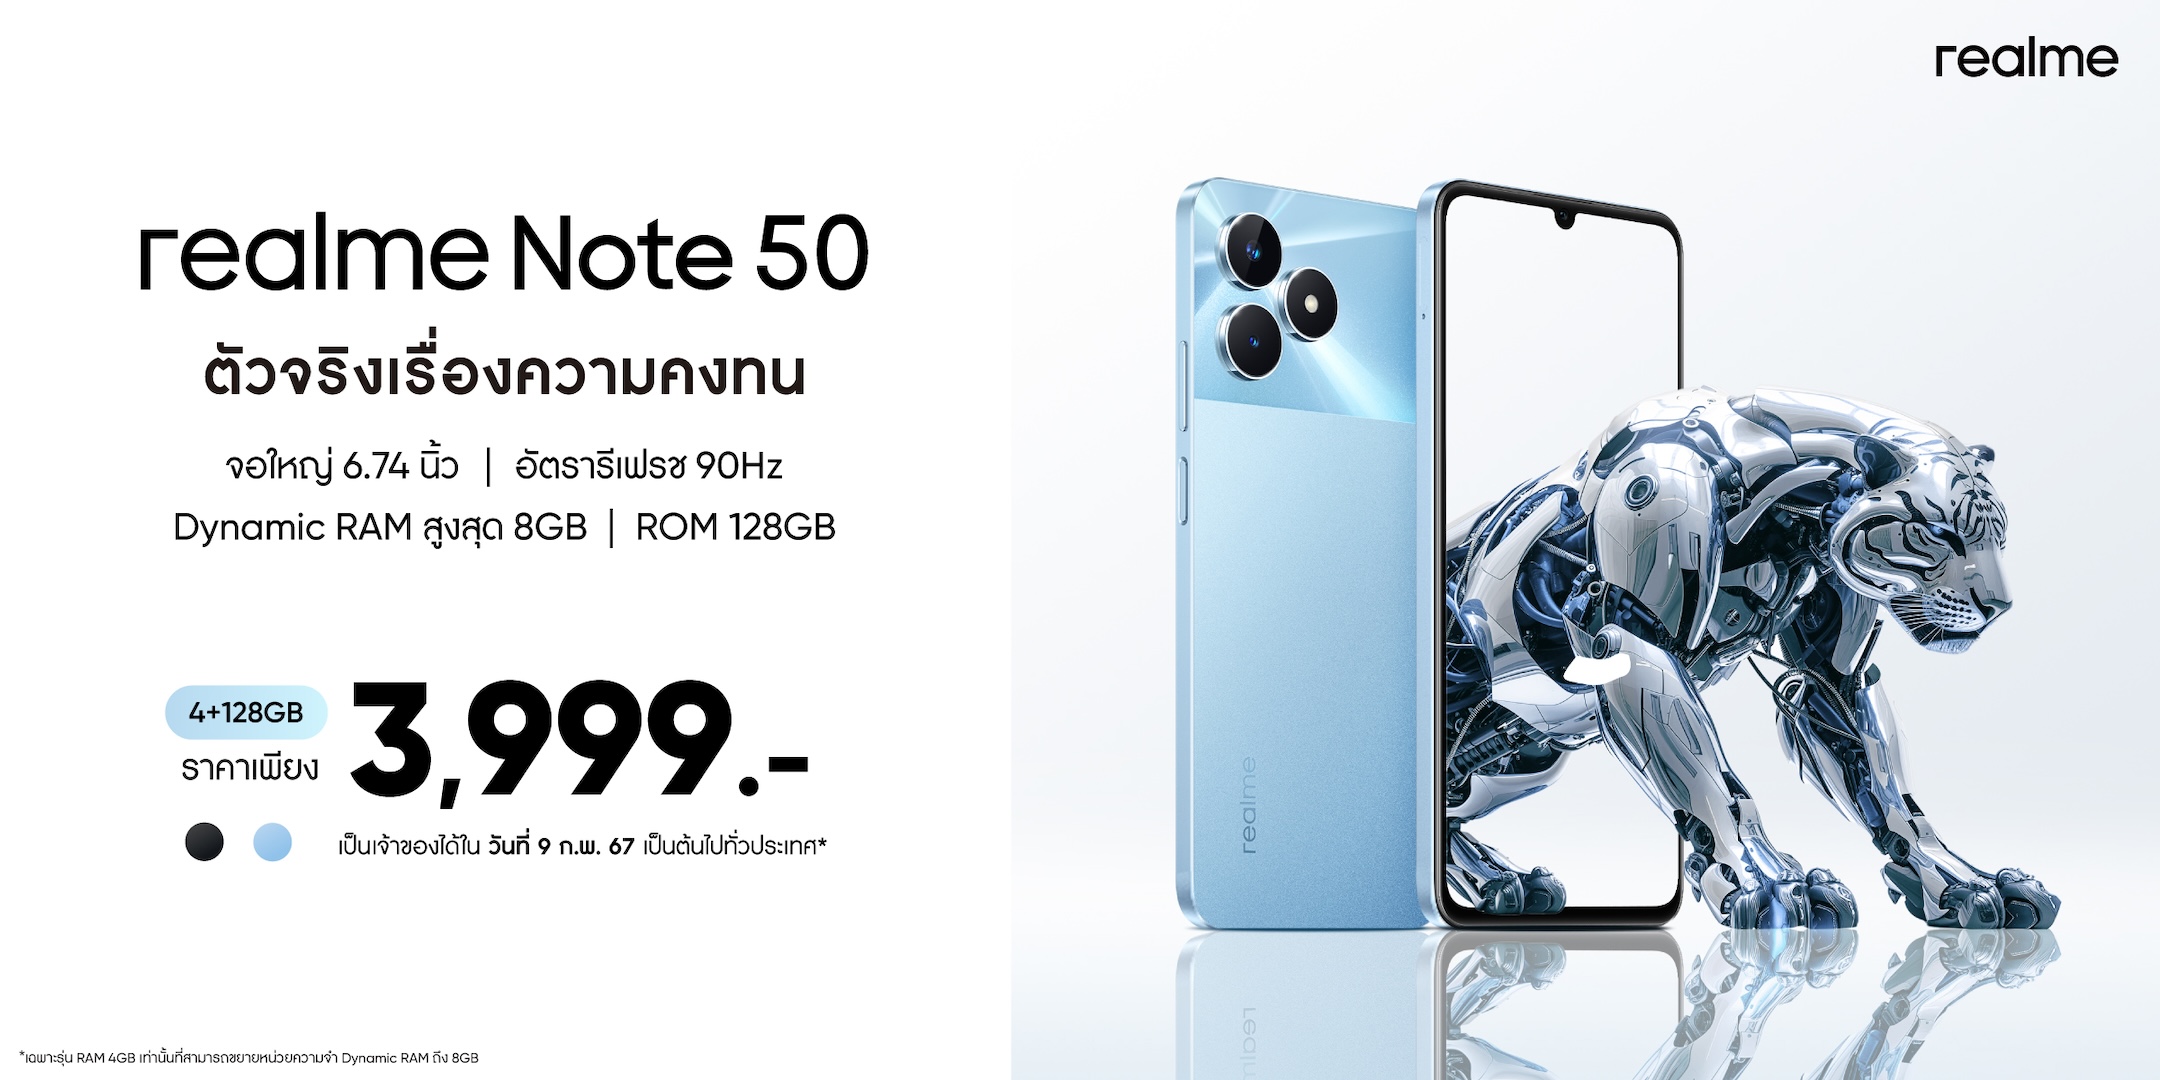 realme Note 50 คุ้มขั้นสุด ของสมาร์ตโฟน Entry-level ในราคา 3,999 บาท